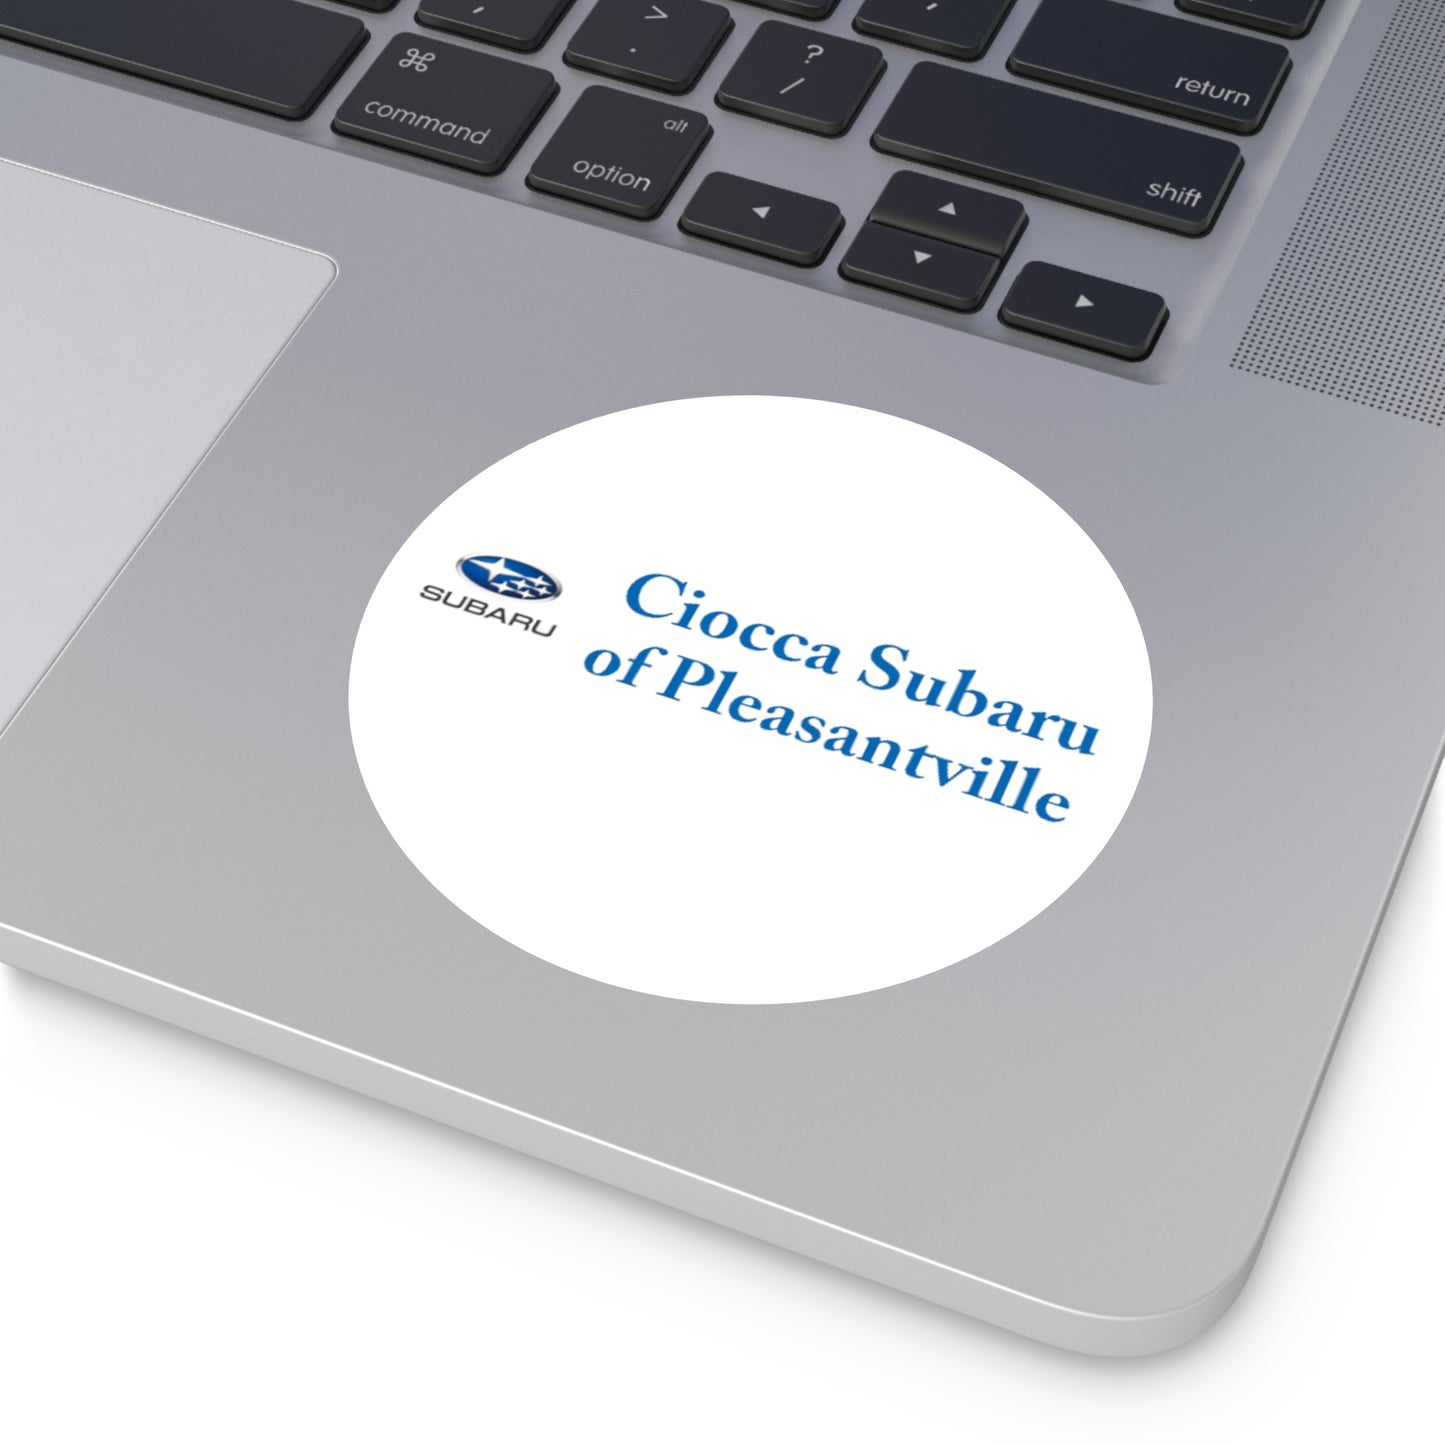 Round Vinyl Stickers - Subaru of Pleasantville